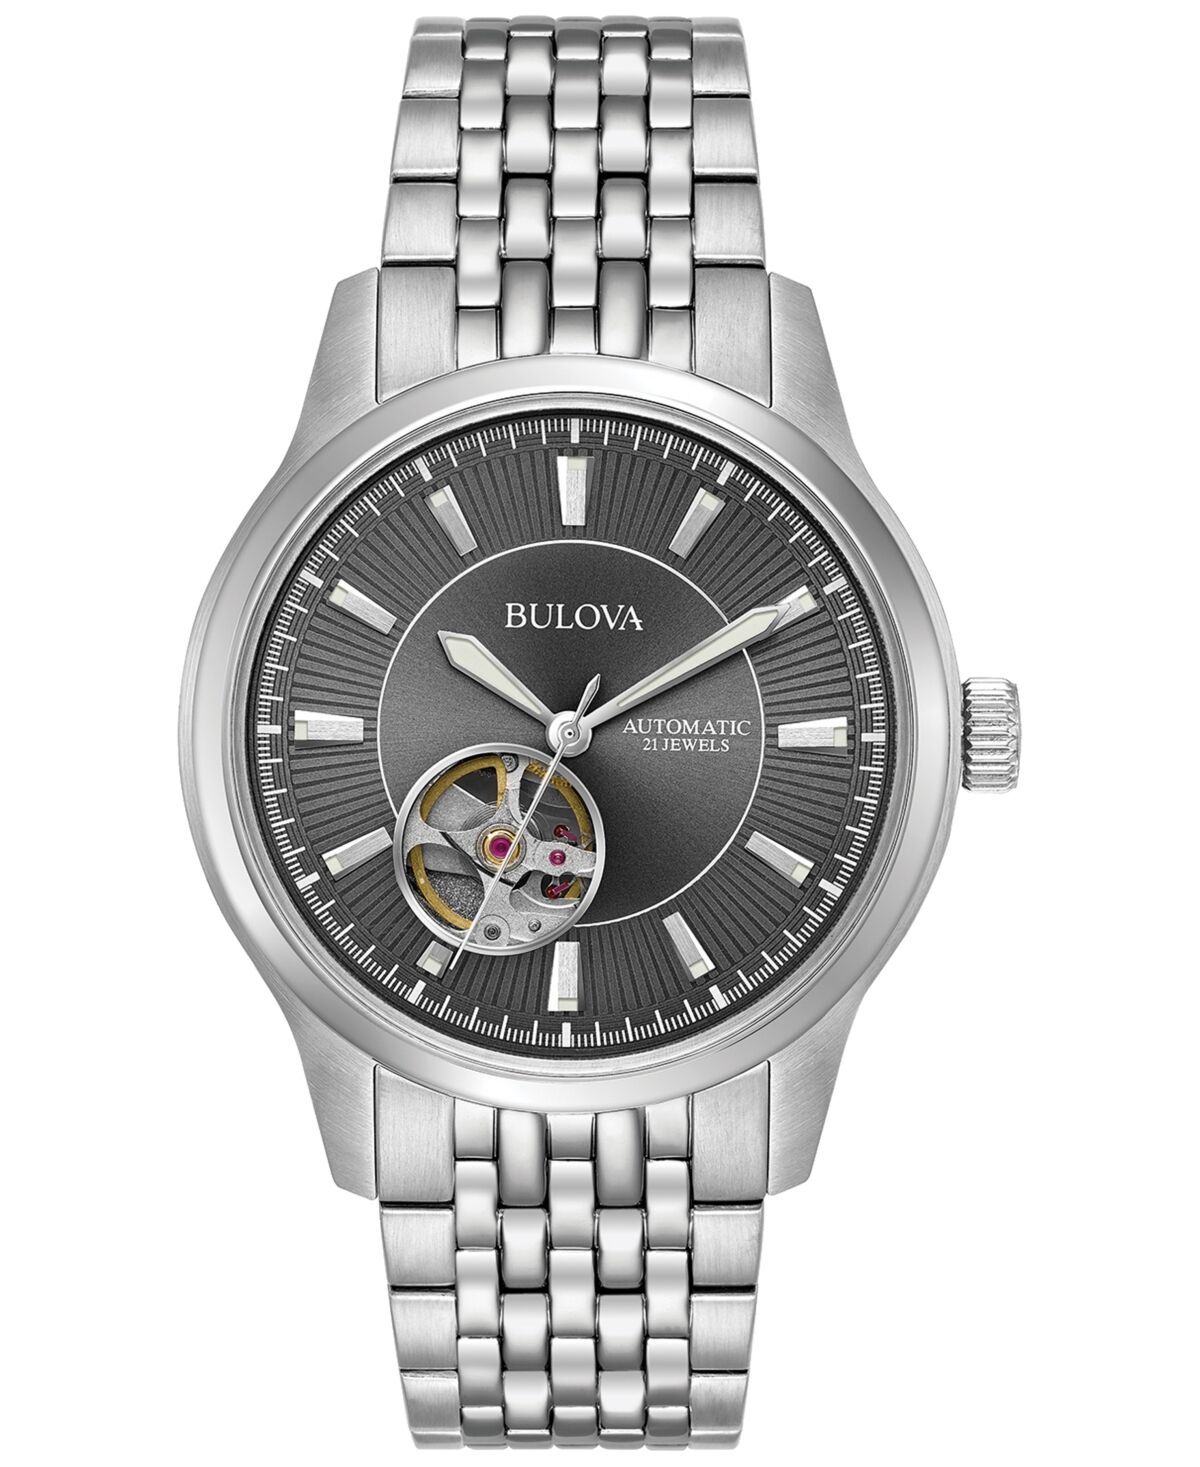 Bulova Men's Automatic Stainless Steel Bracelet Watch 40mm 96A190 - Silver